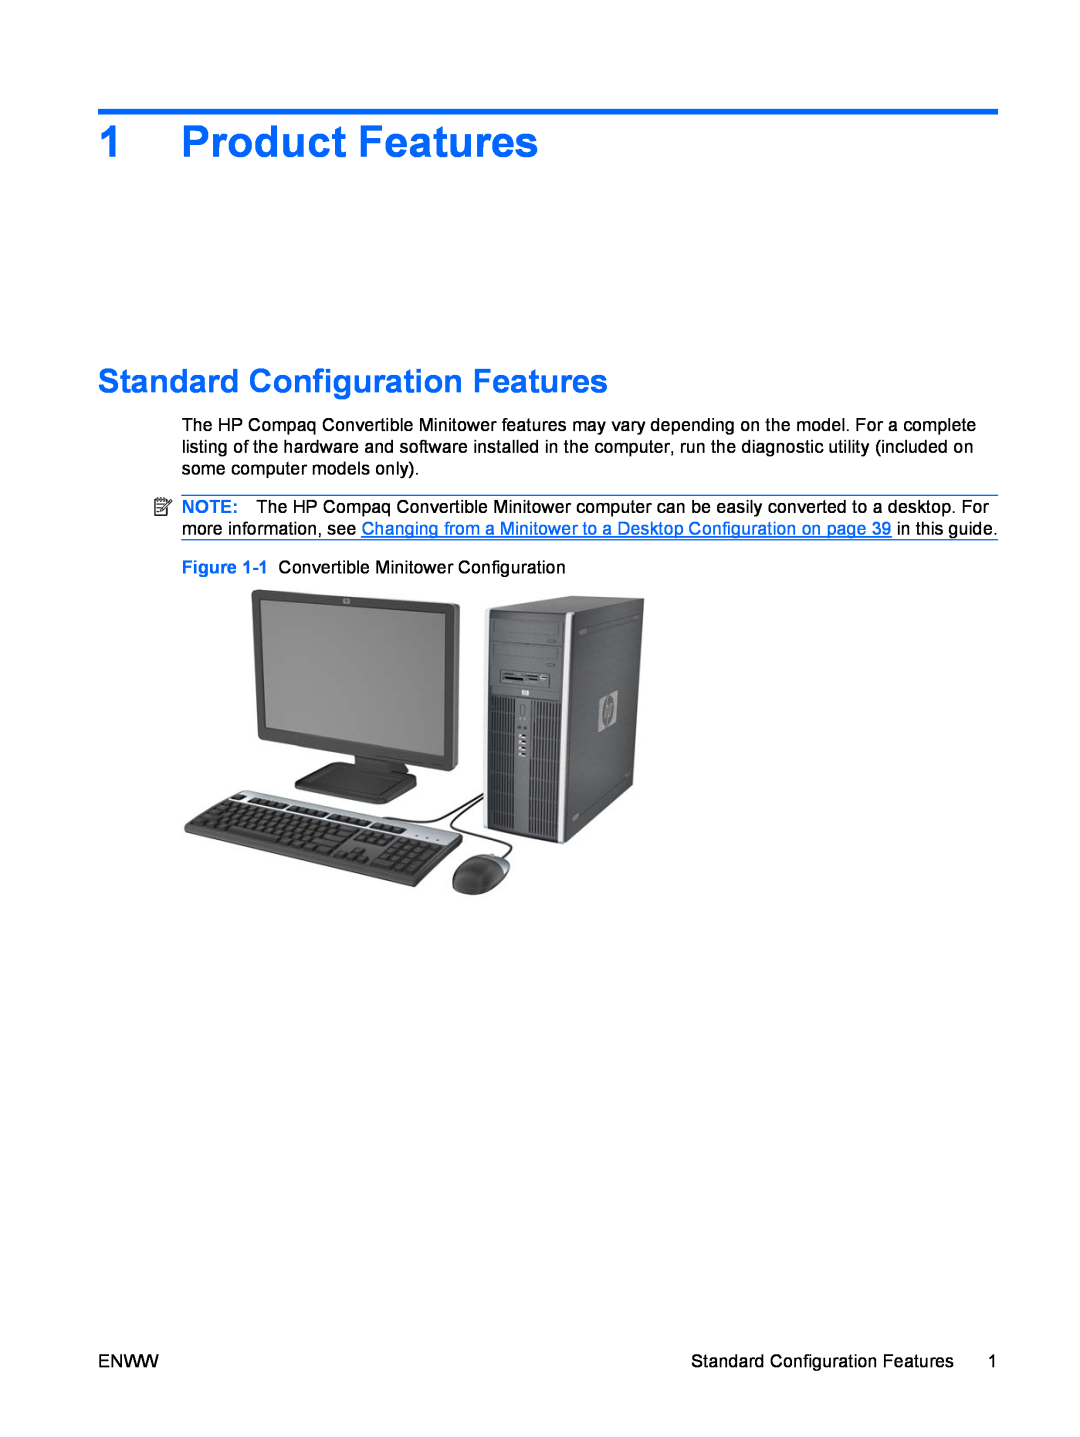 Hitachi 8000 Elite manual Product Features, Standard Configuration Features 